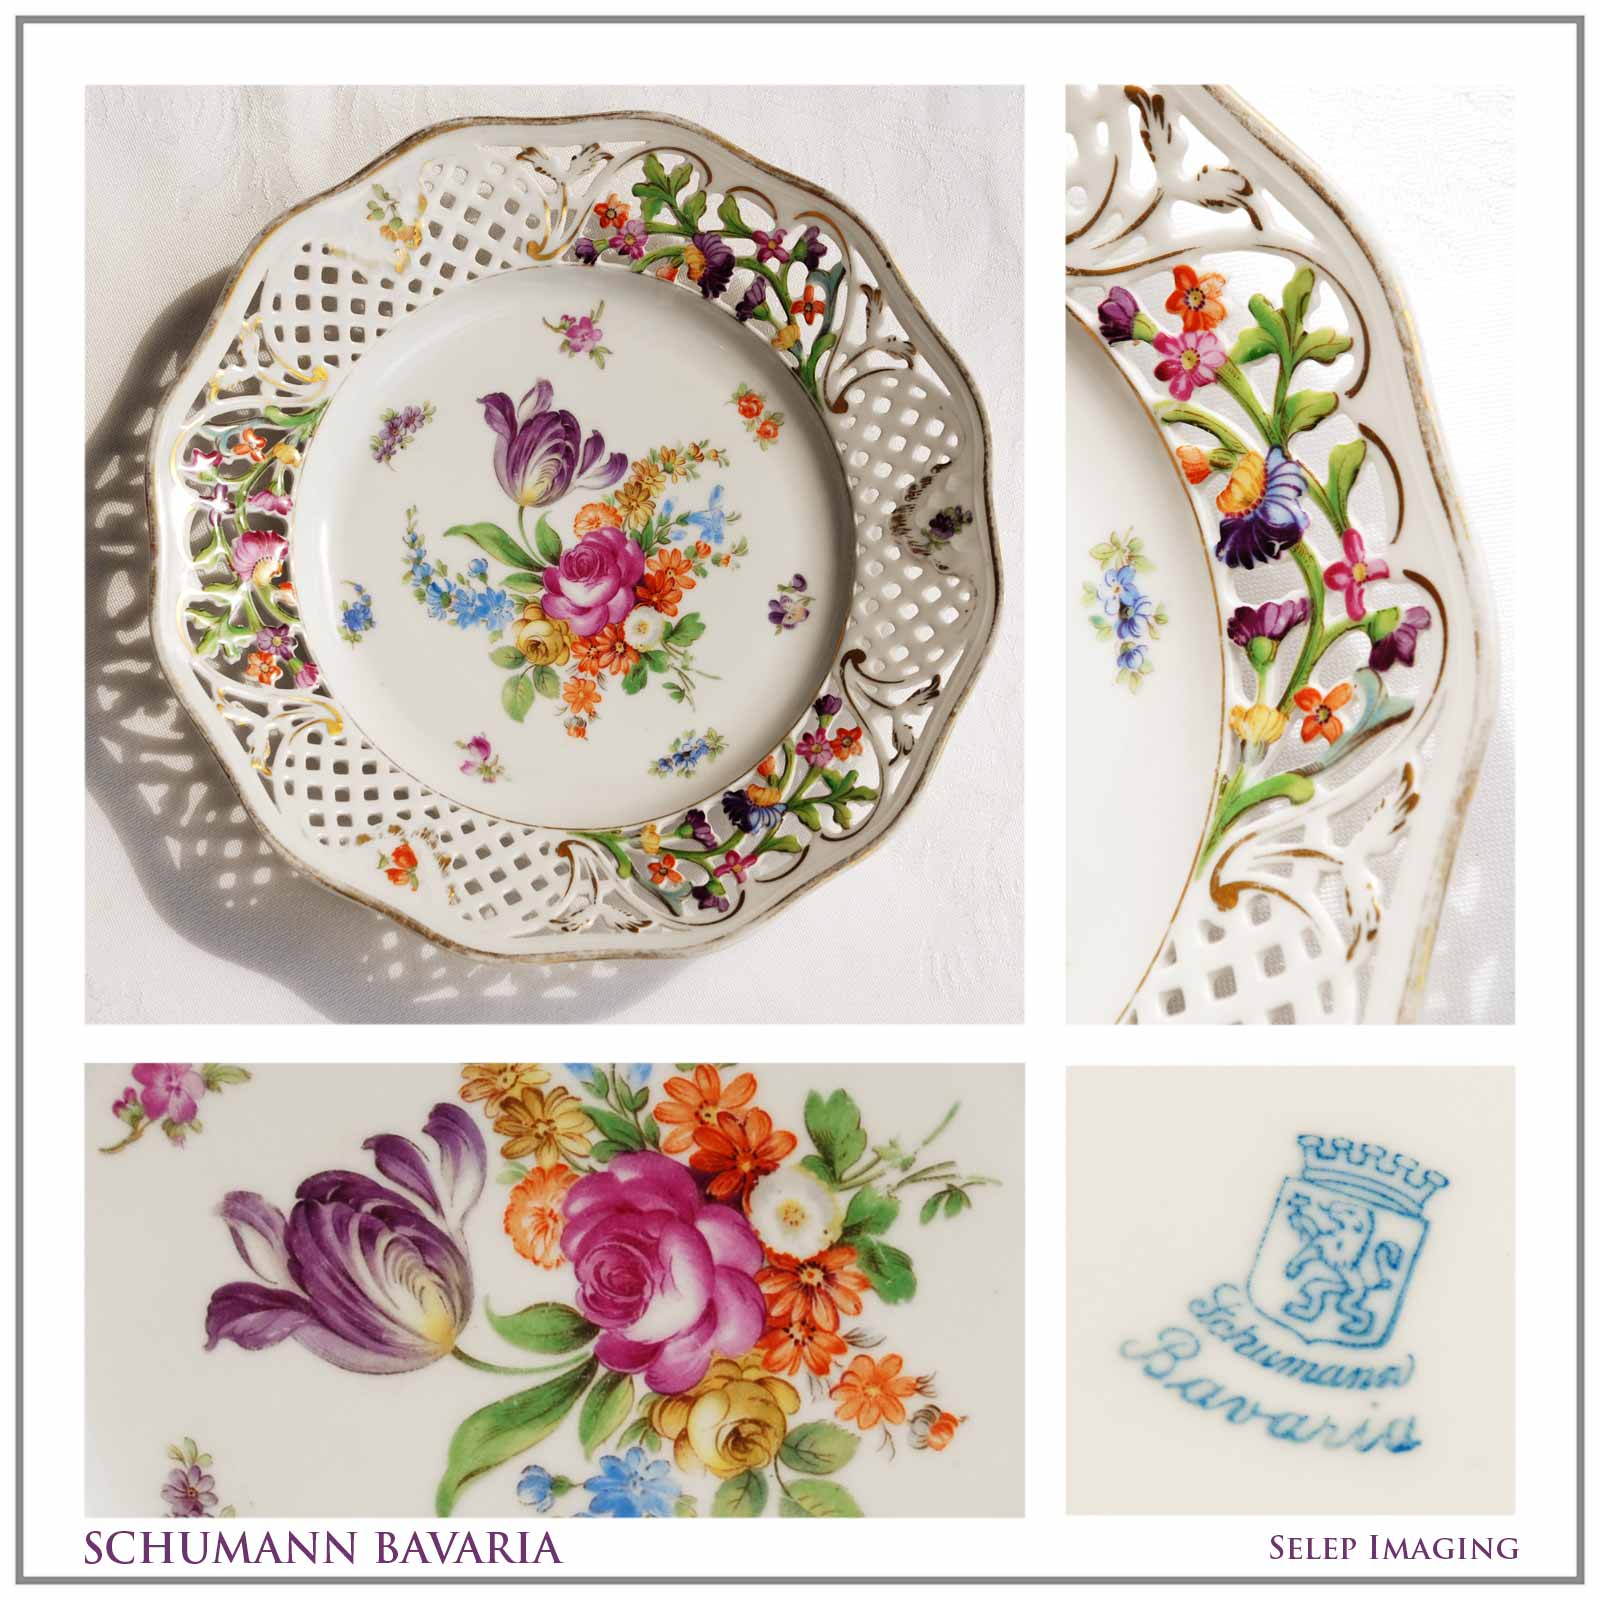 Schumann Bavaria china plate Reticulated porcelain